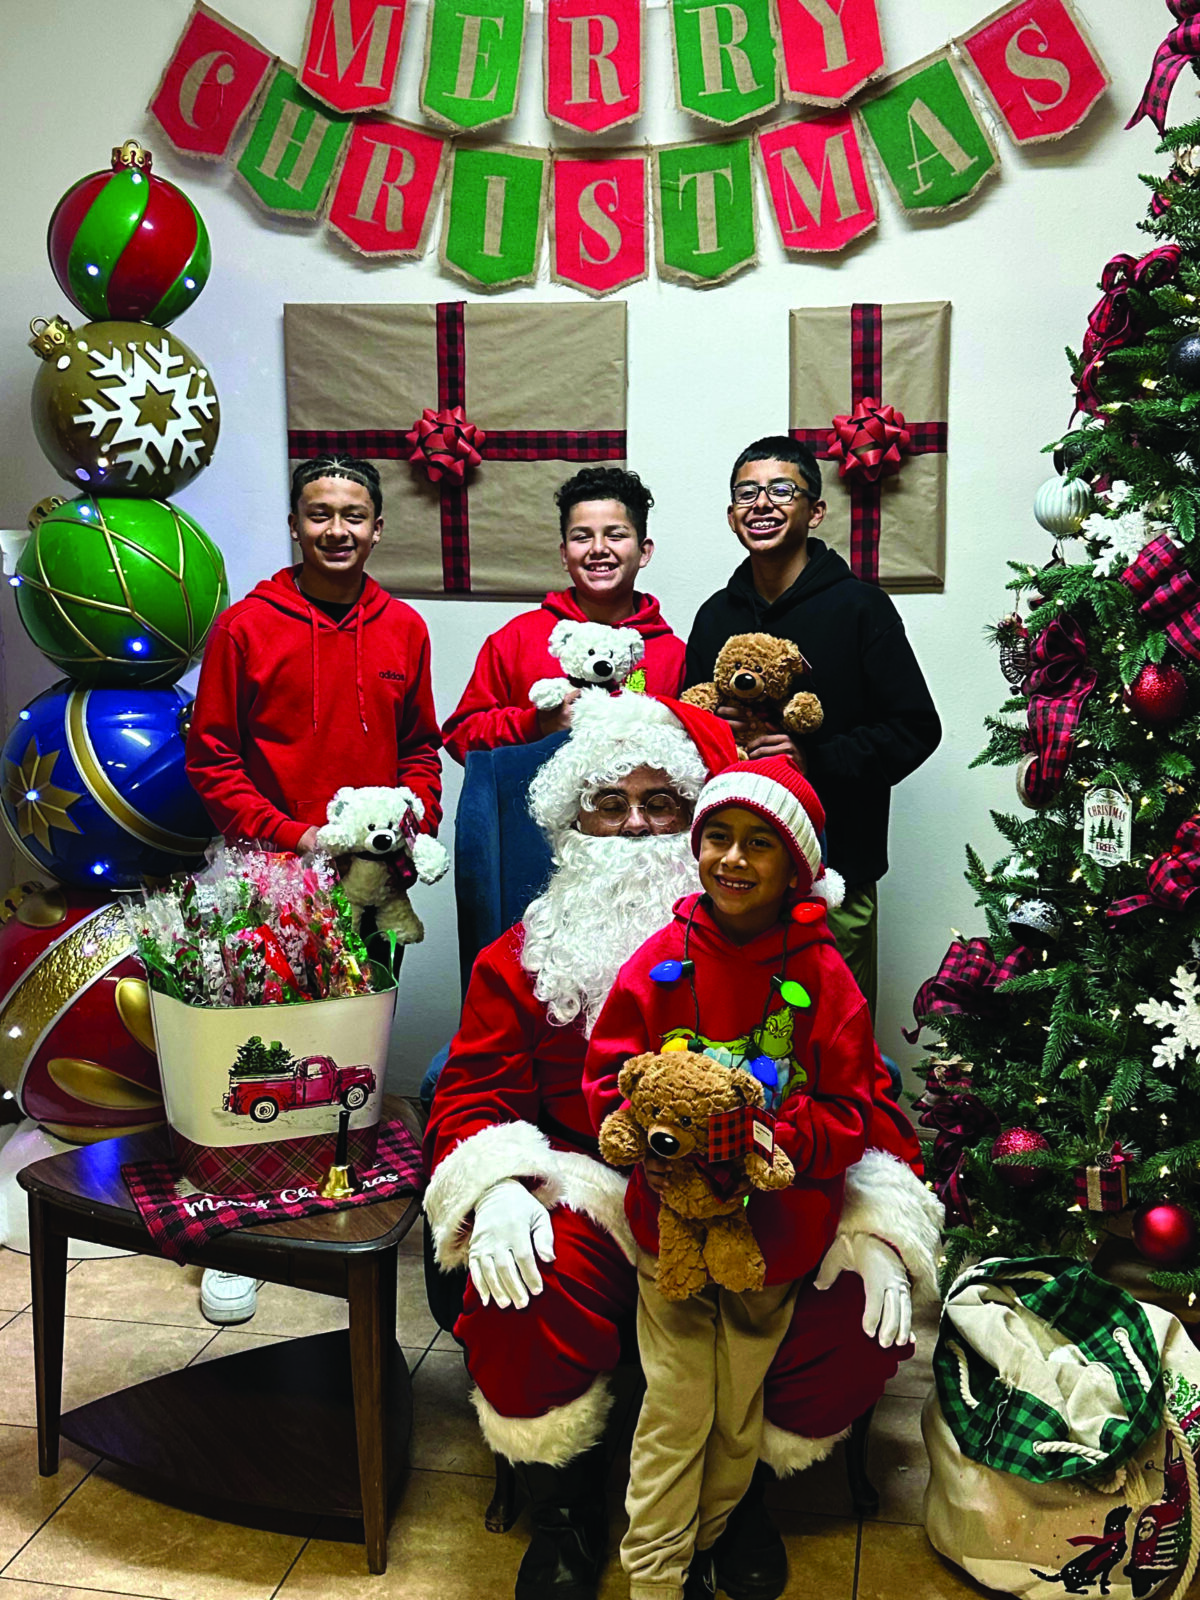 150 Teddy Bears given away at Natalia City/ NMDD event by Santa